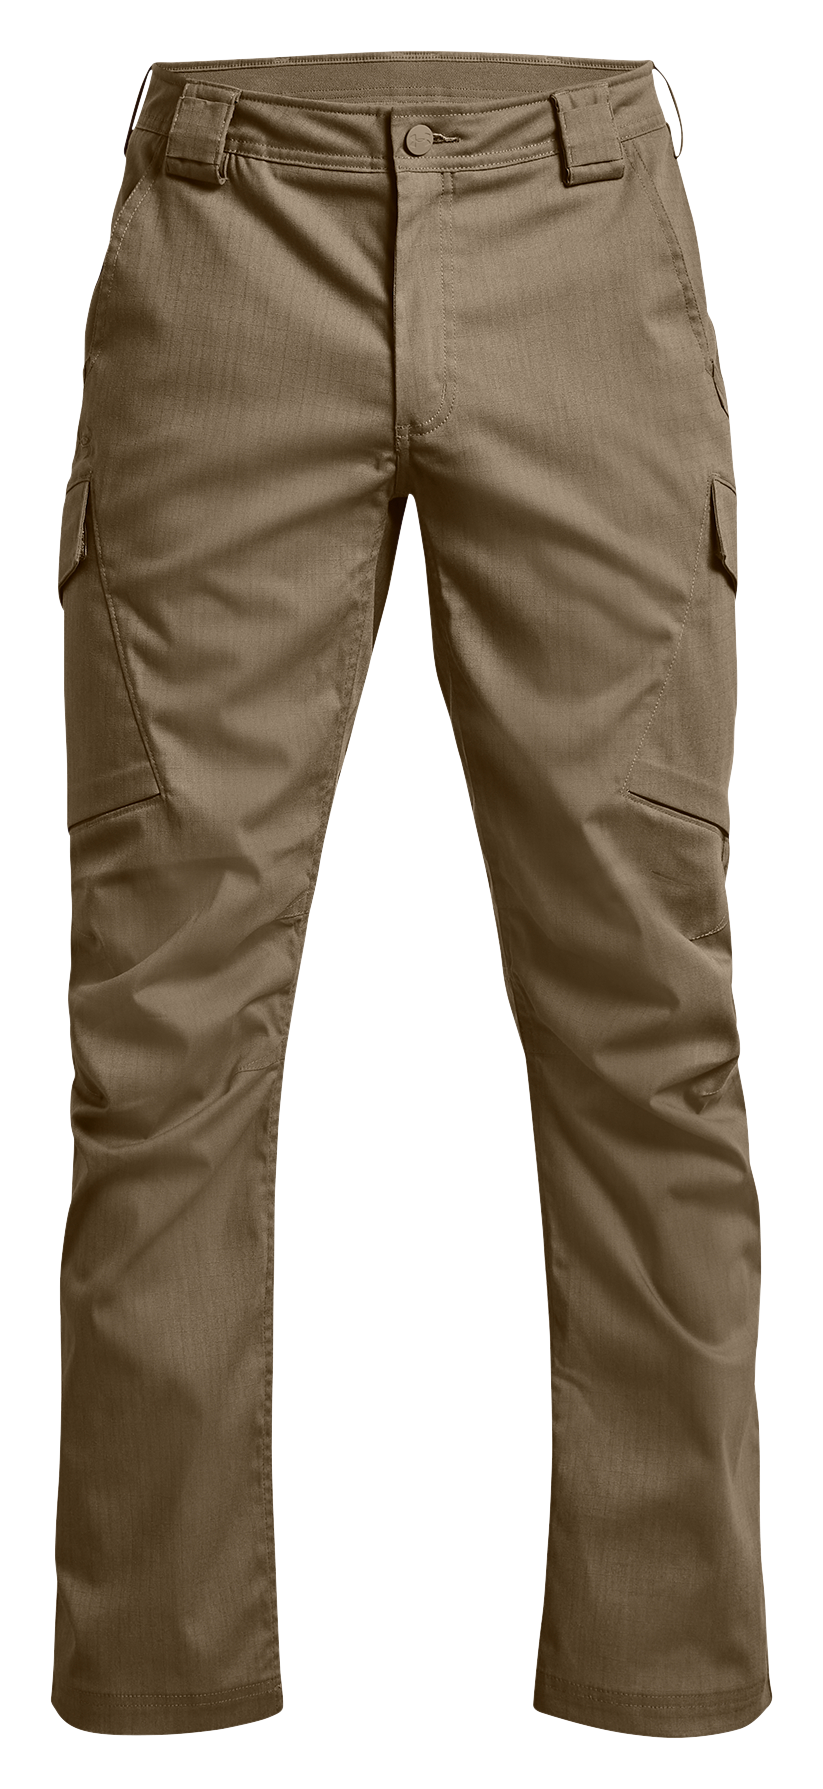 Under Armour Men's UA Enduro Pants Lightweight Combat Duty Tactical Pants